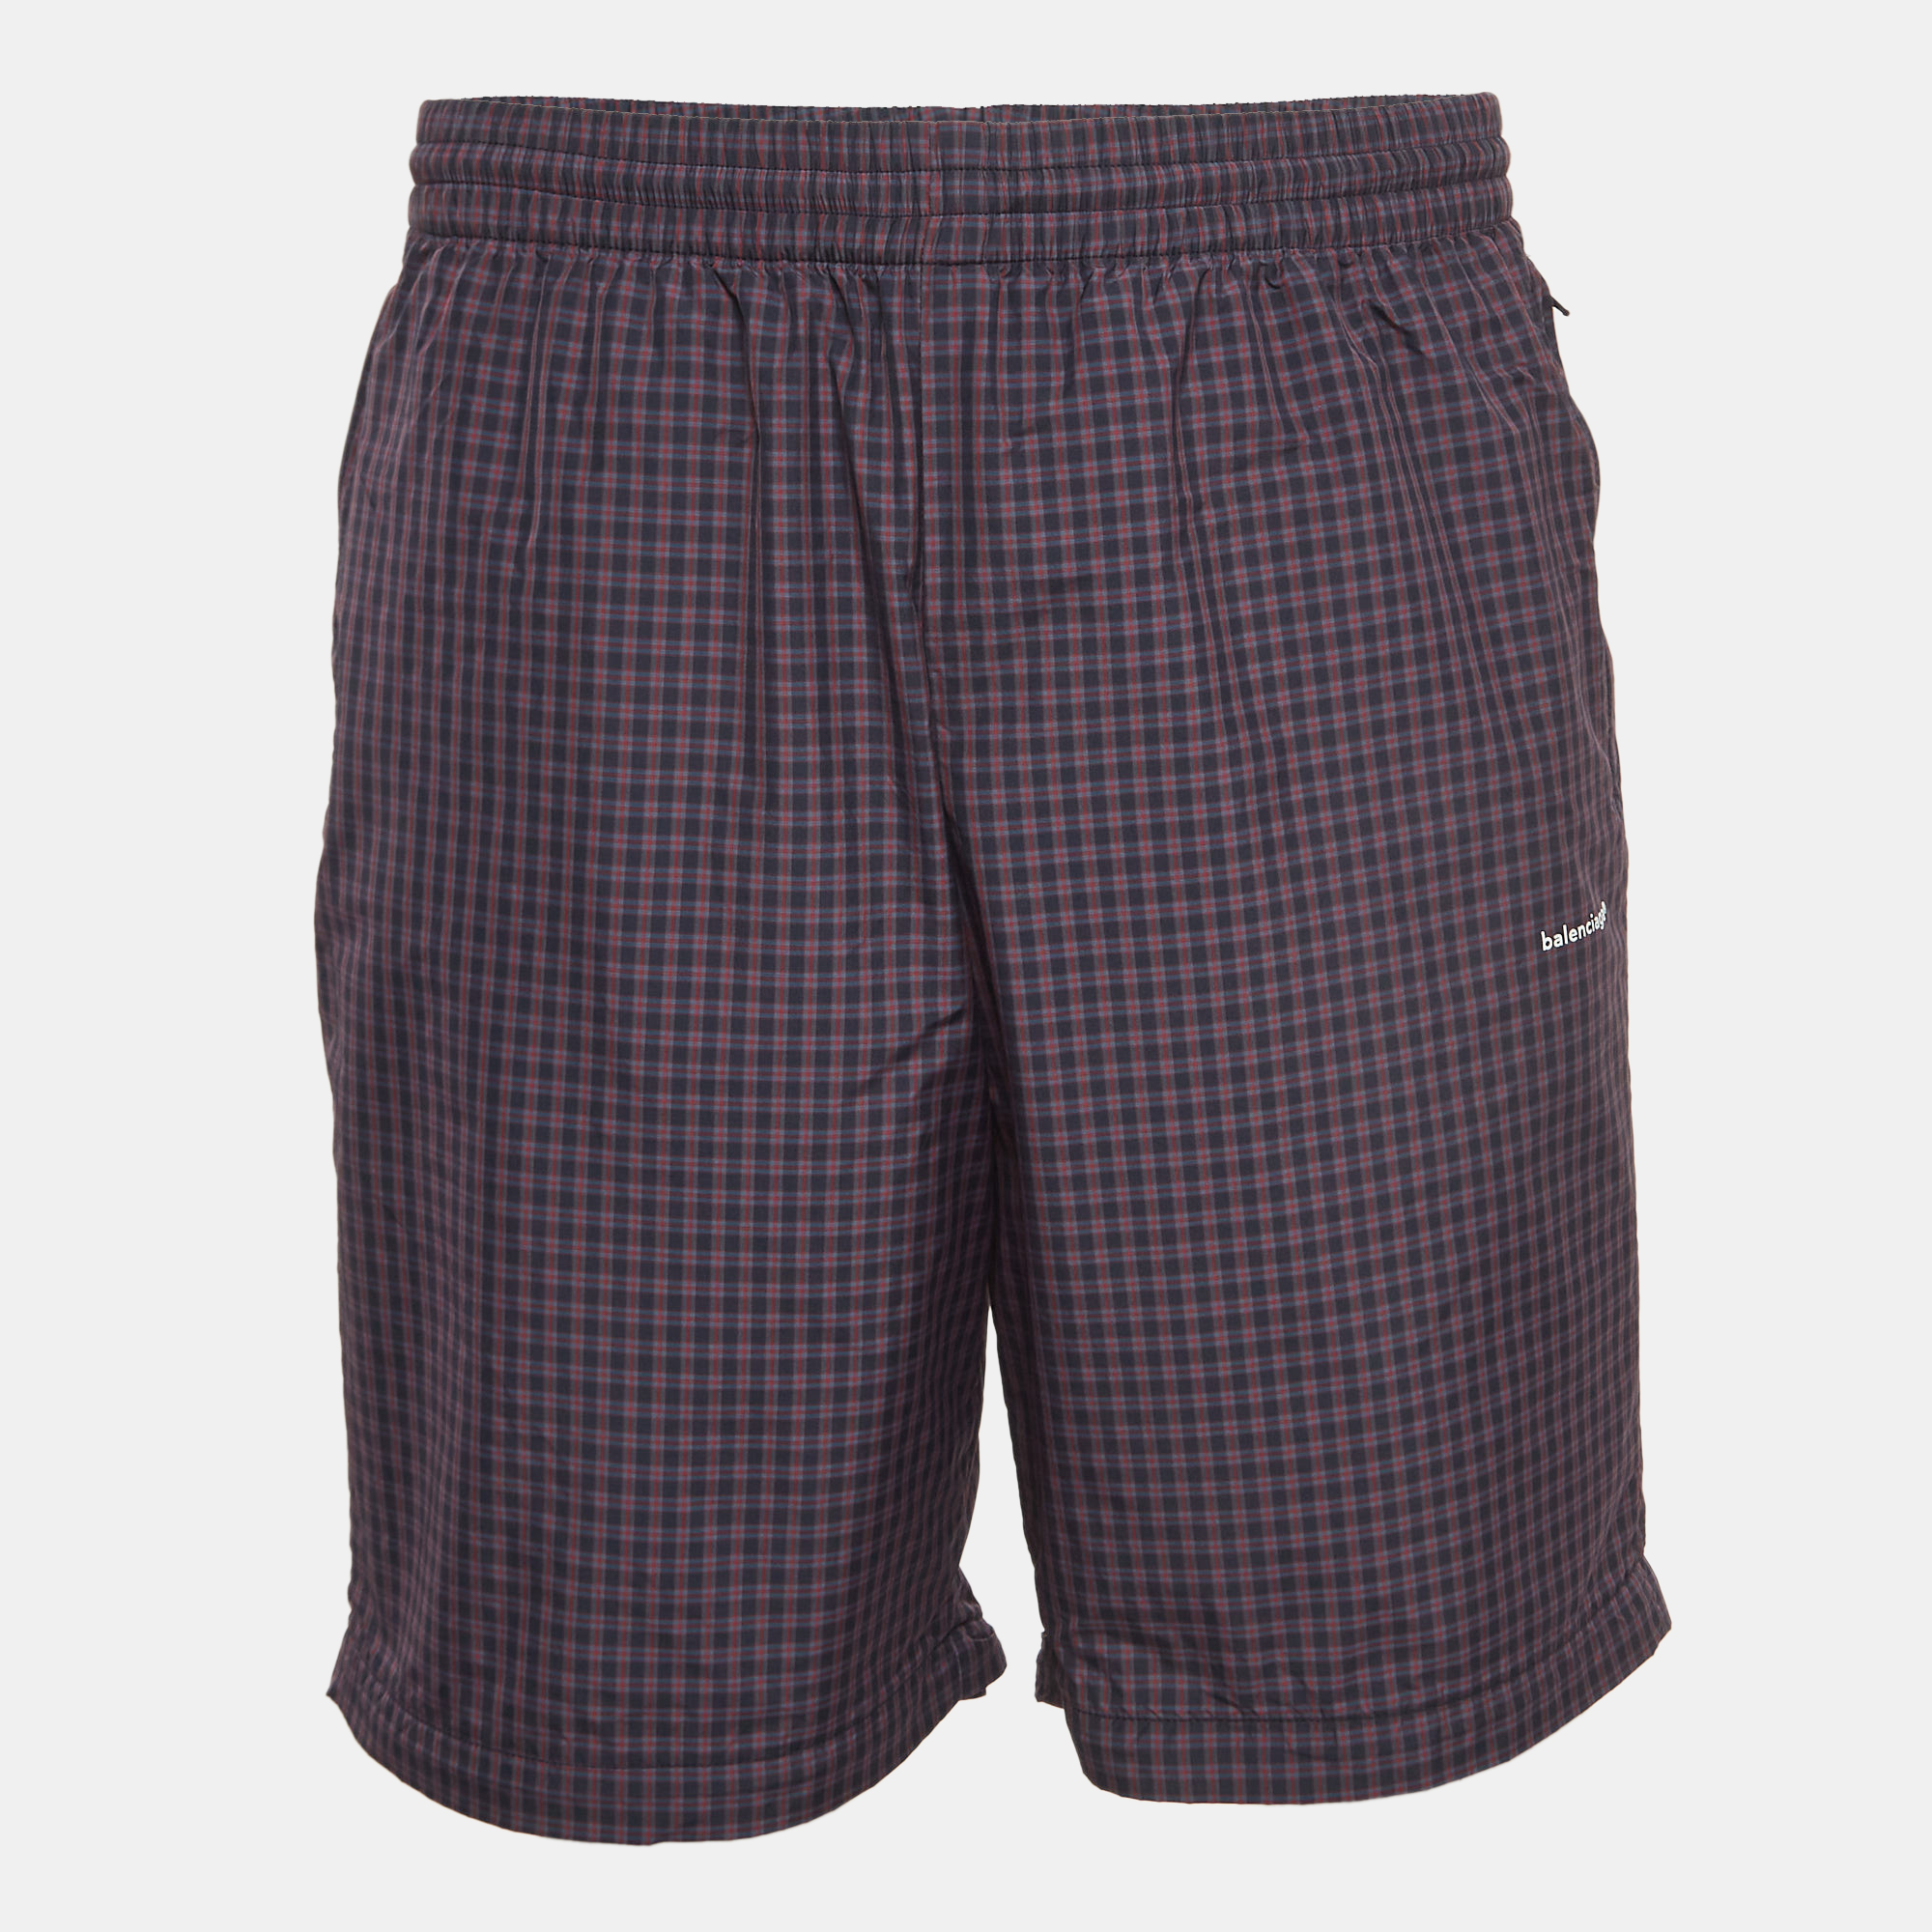 Balenciaga navy blue/red checked nylon drawstring shorts m